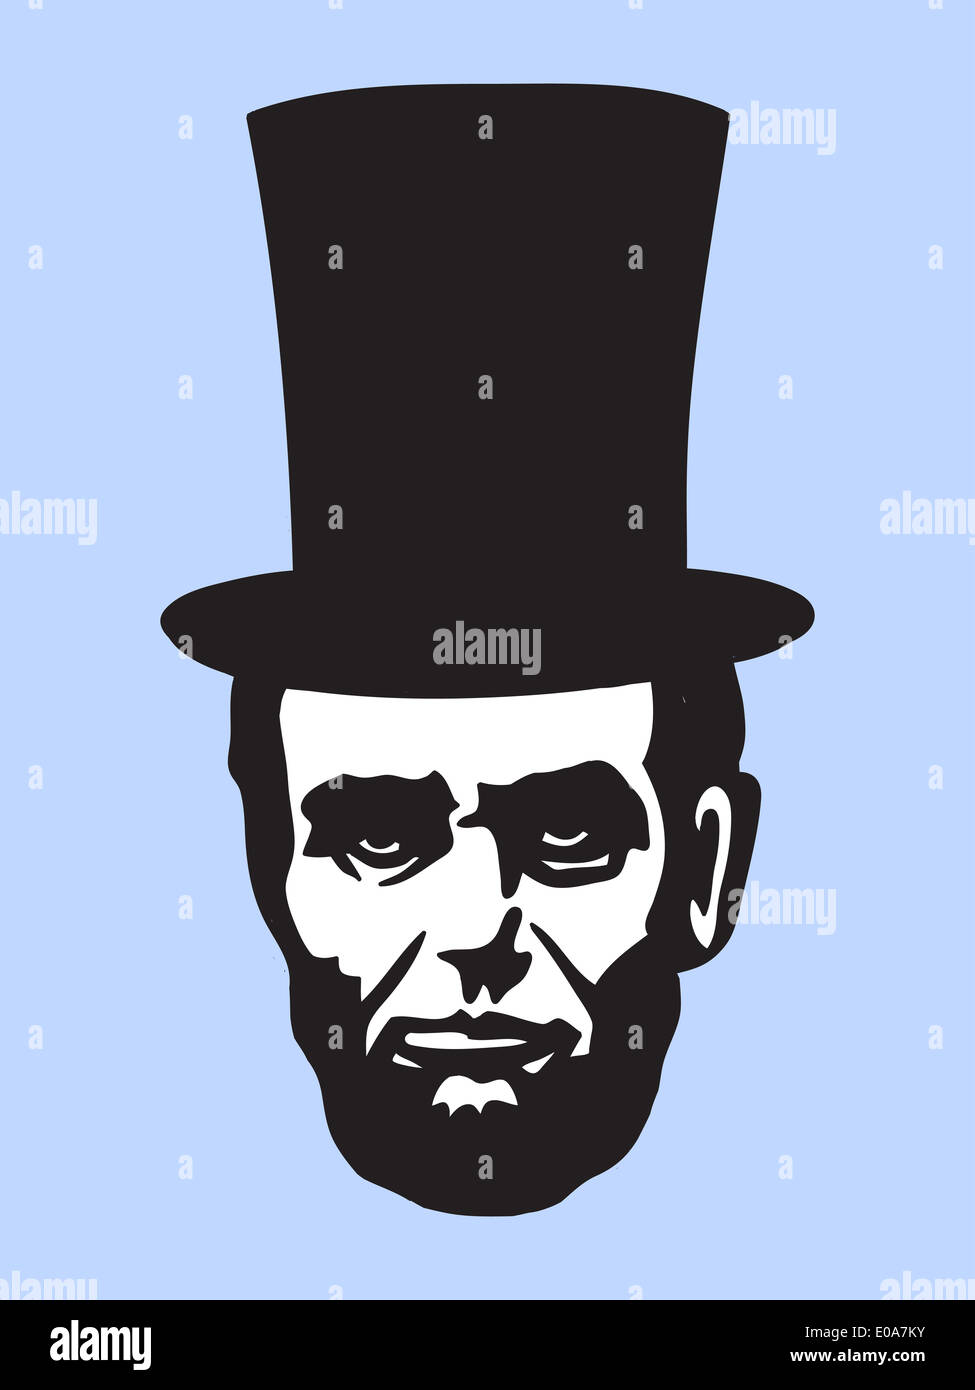 Abraham Lincoln illustration Stock Photo